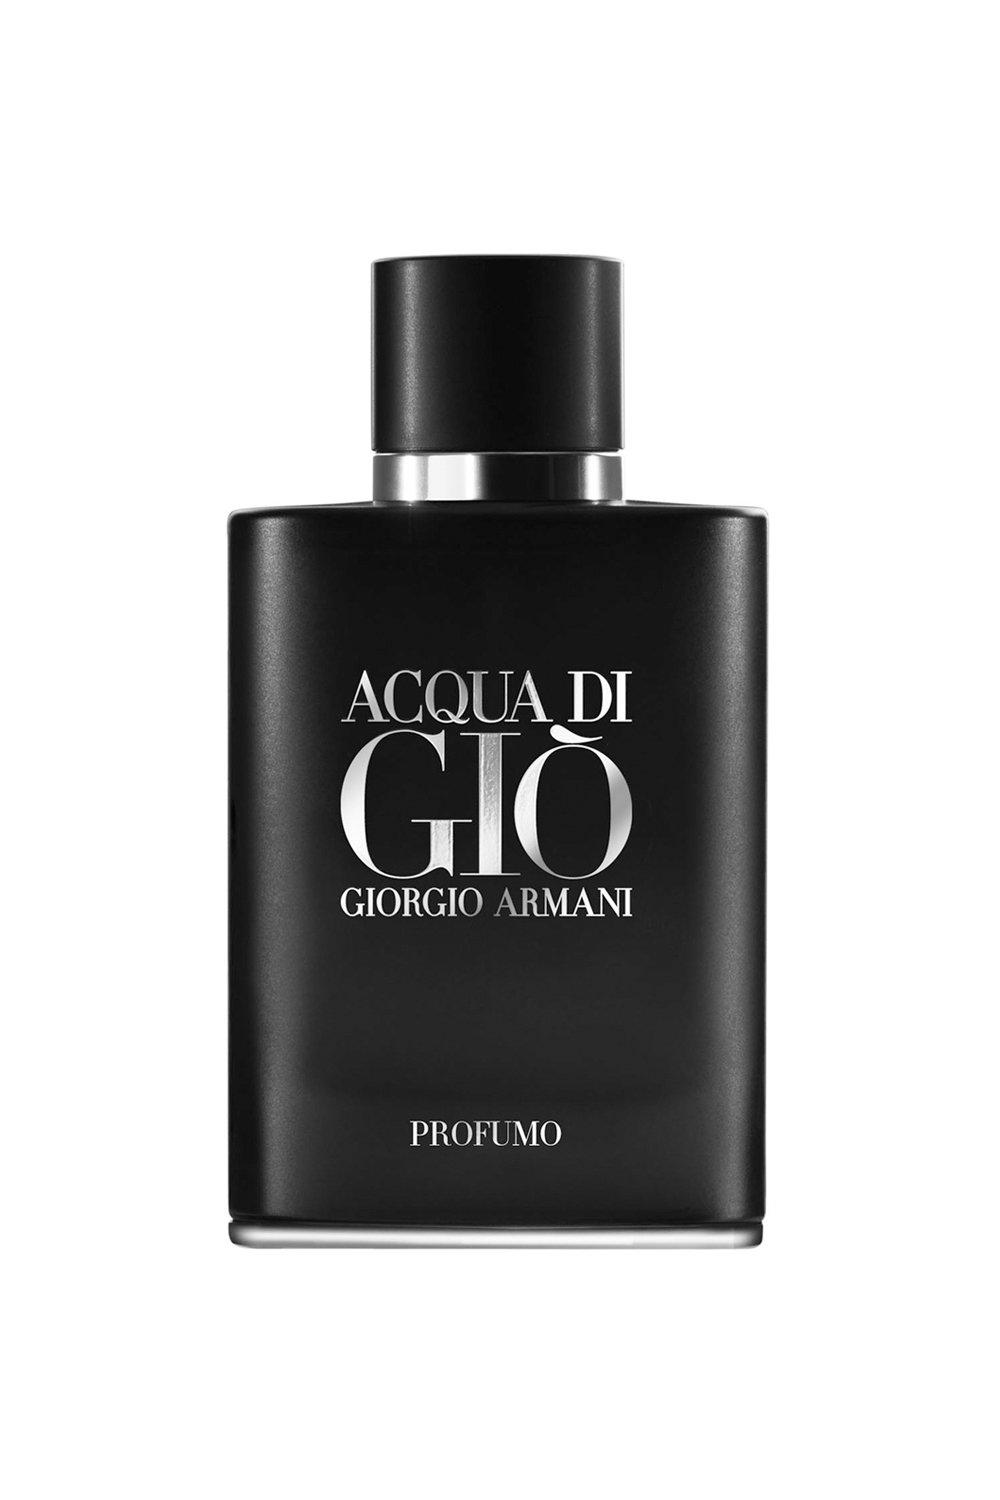 Experience Giorgio Armani: The Finest Italian Clothing & Lifestyle Items